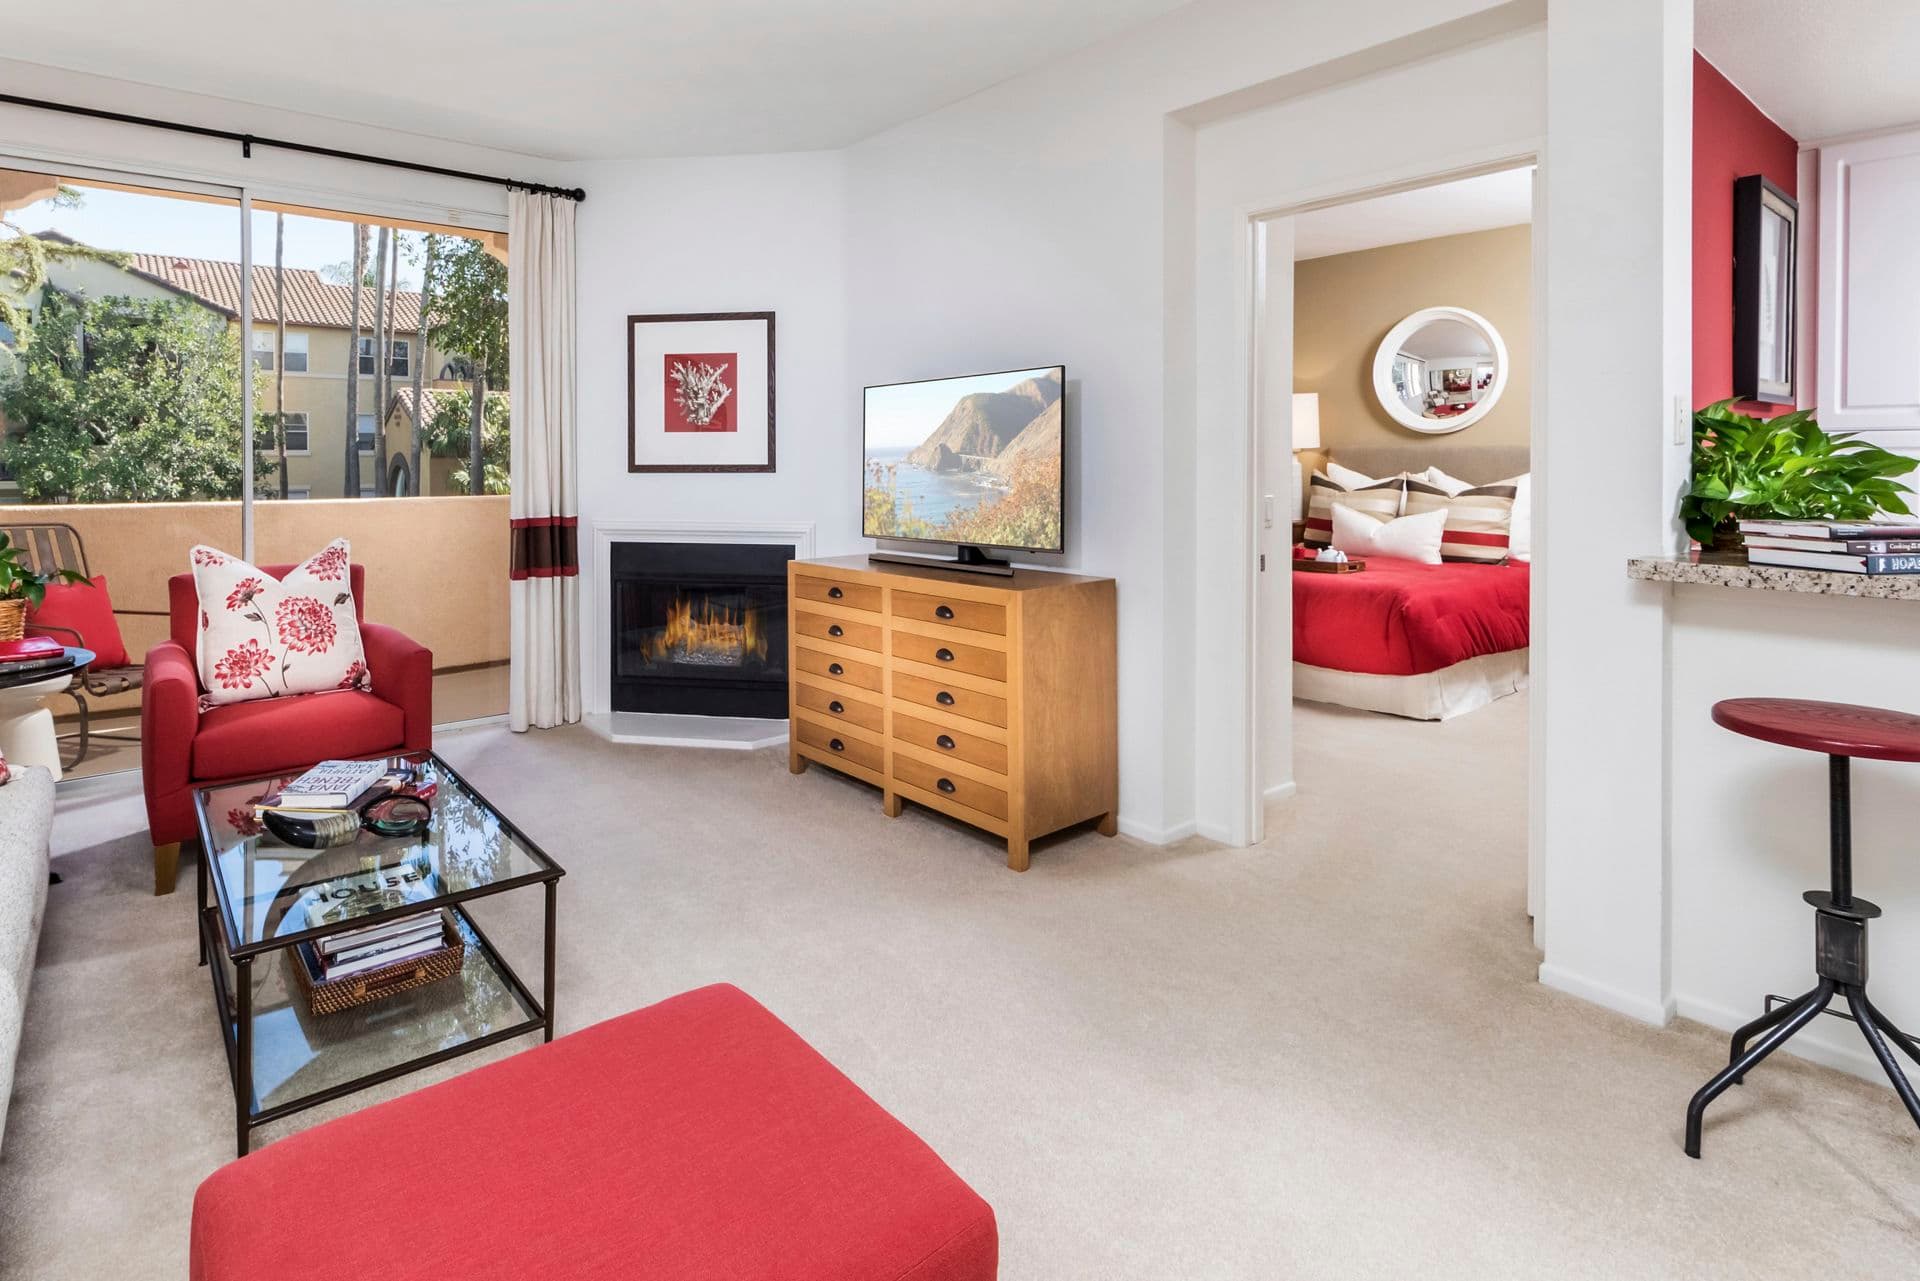 Interior view of living room at Estancia Apartment Homes in Irvine, CA.